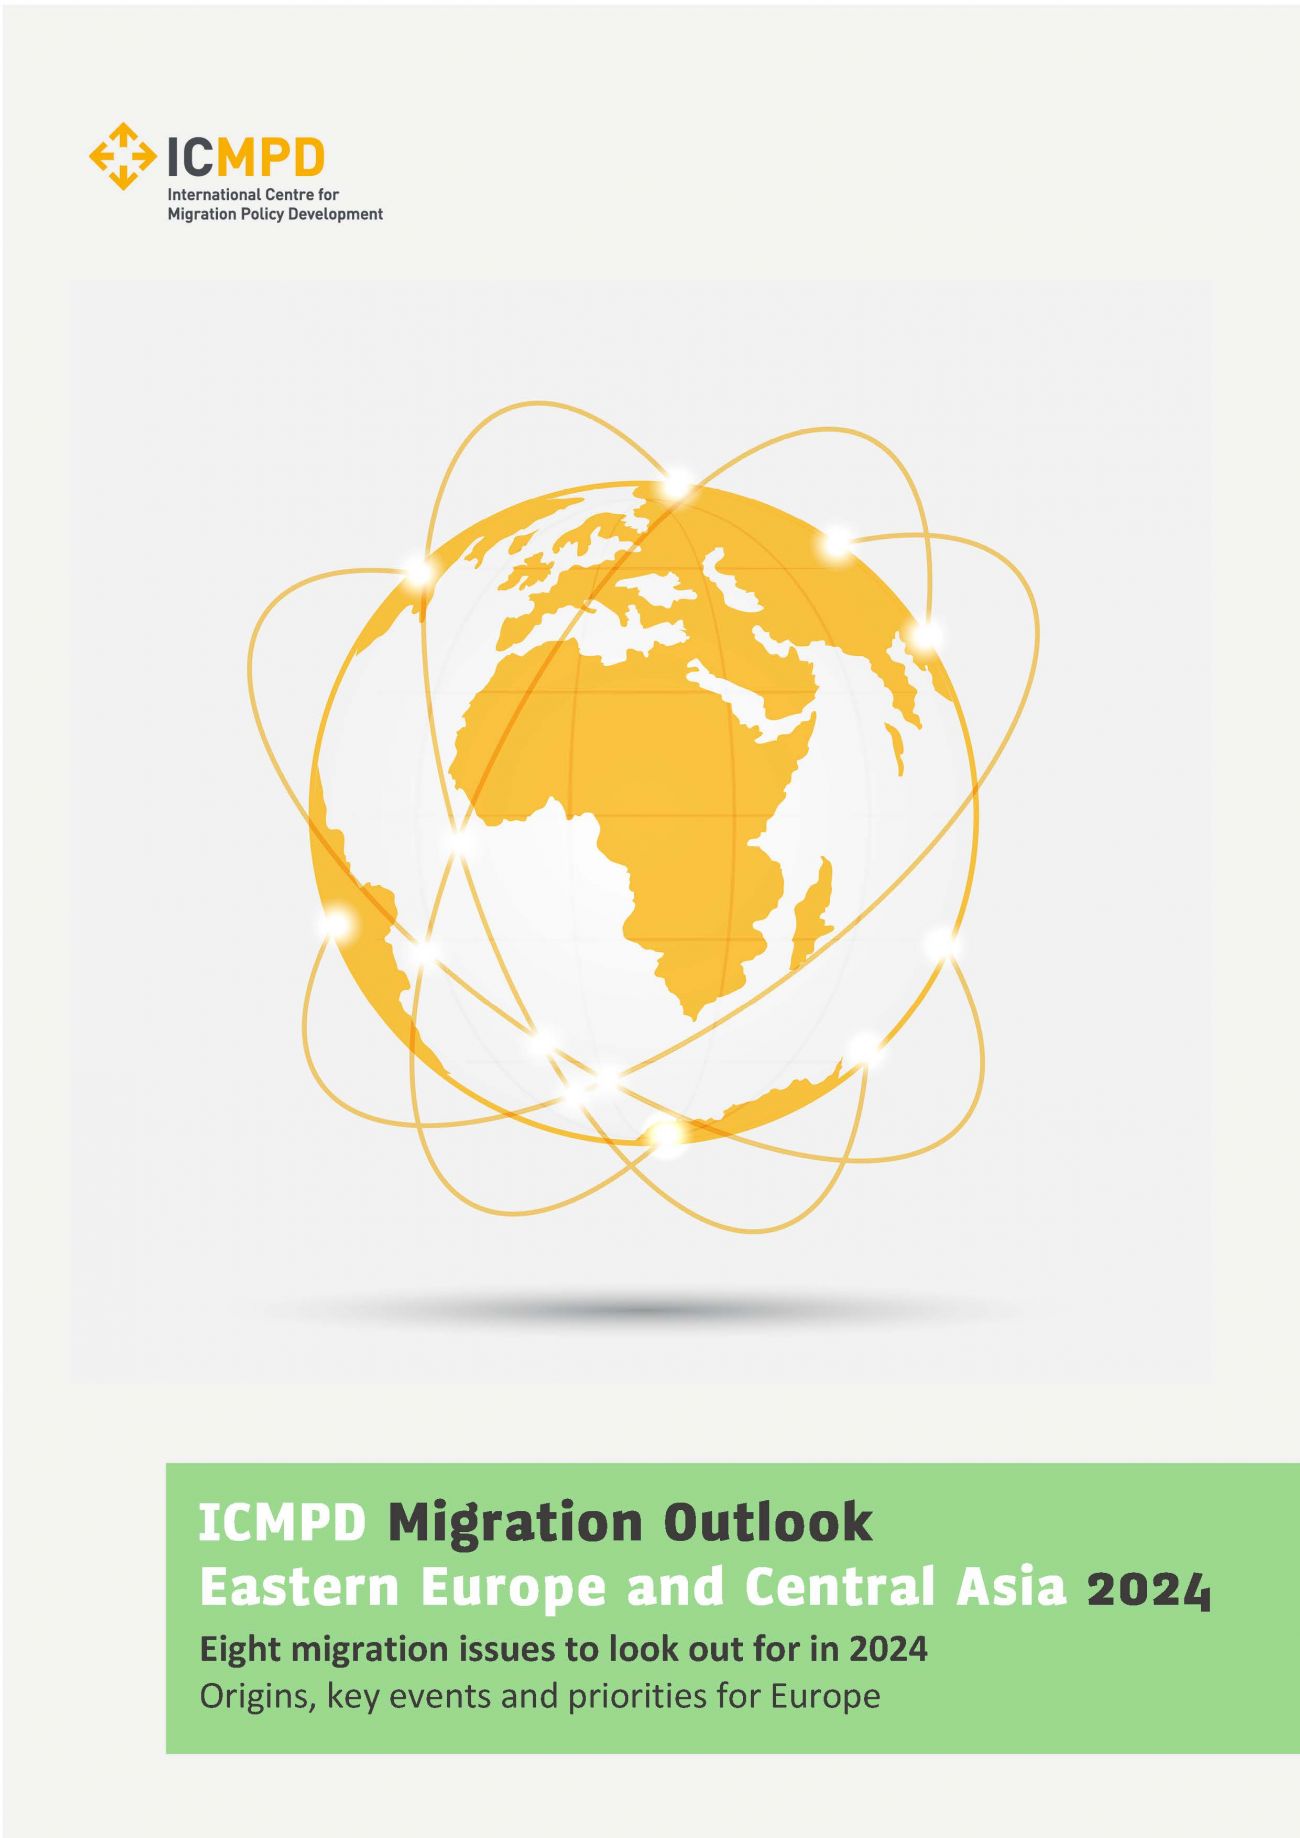 ICMPD Migration Outlook EECA 2024_Cover.jpg